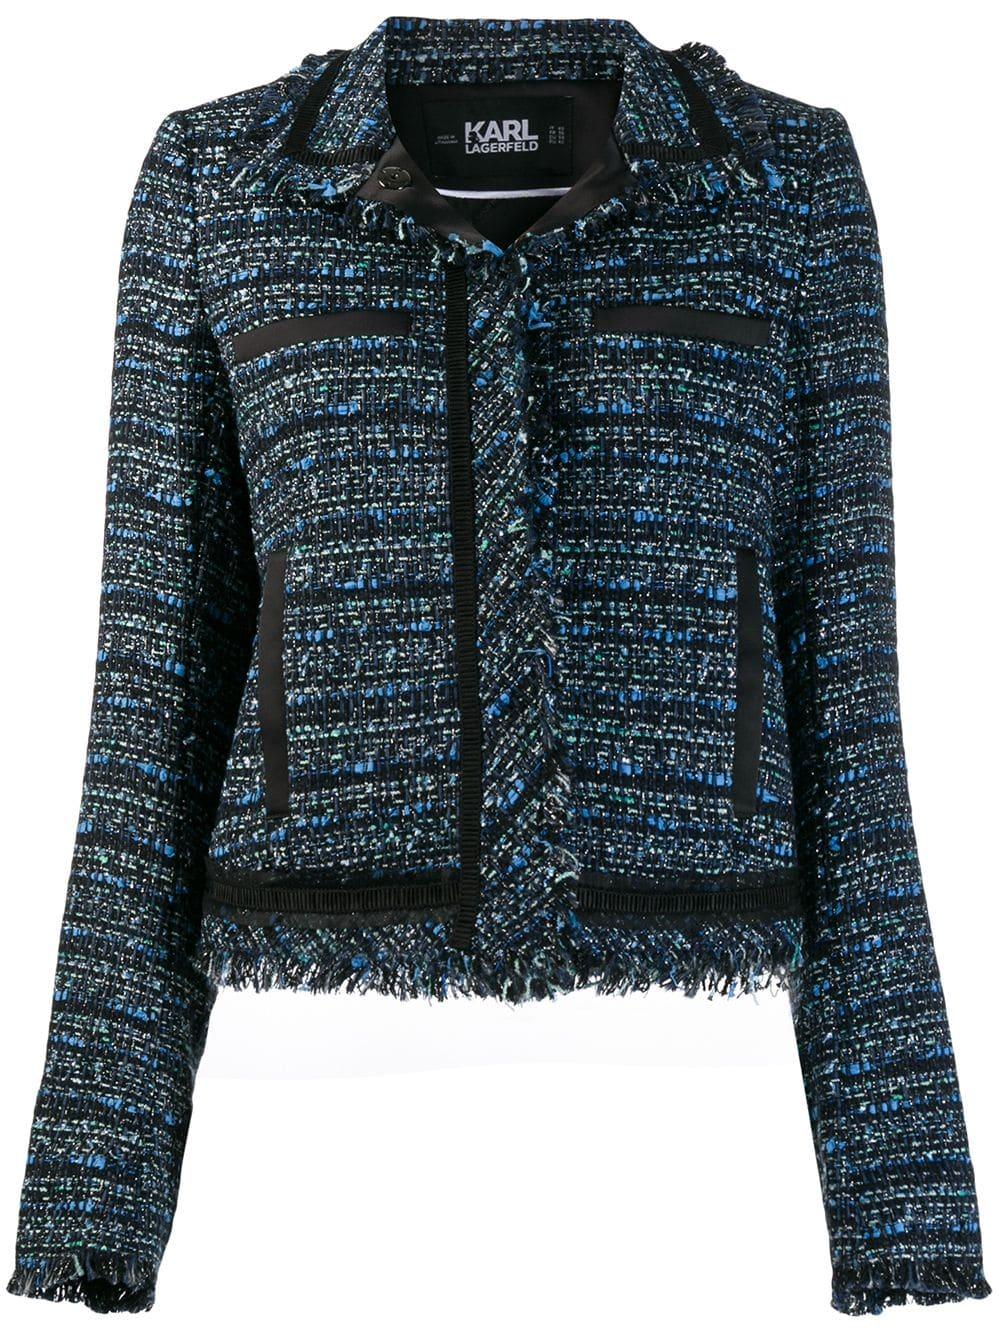 Karl Lagerfeld Tweed Bouclé Jacket in Blue - Lyst